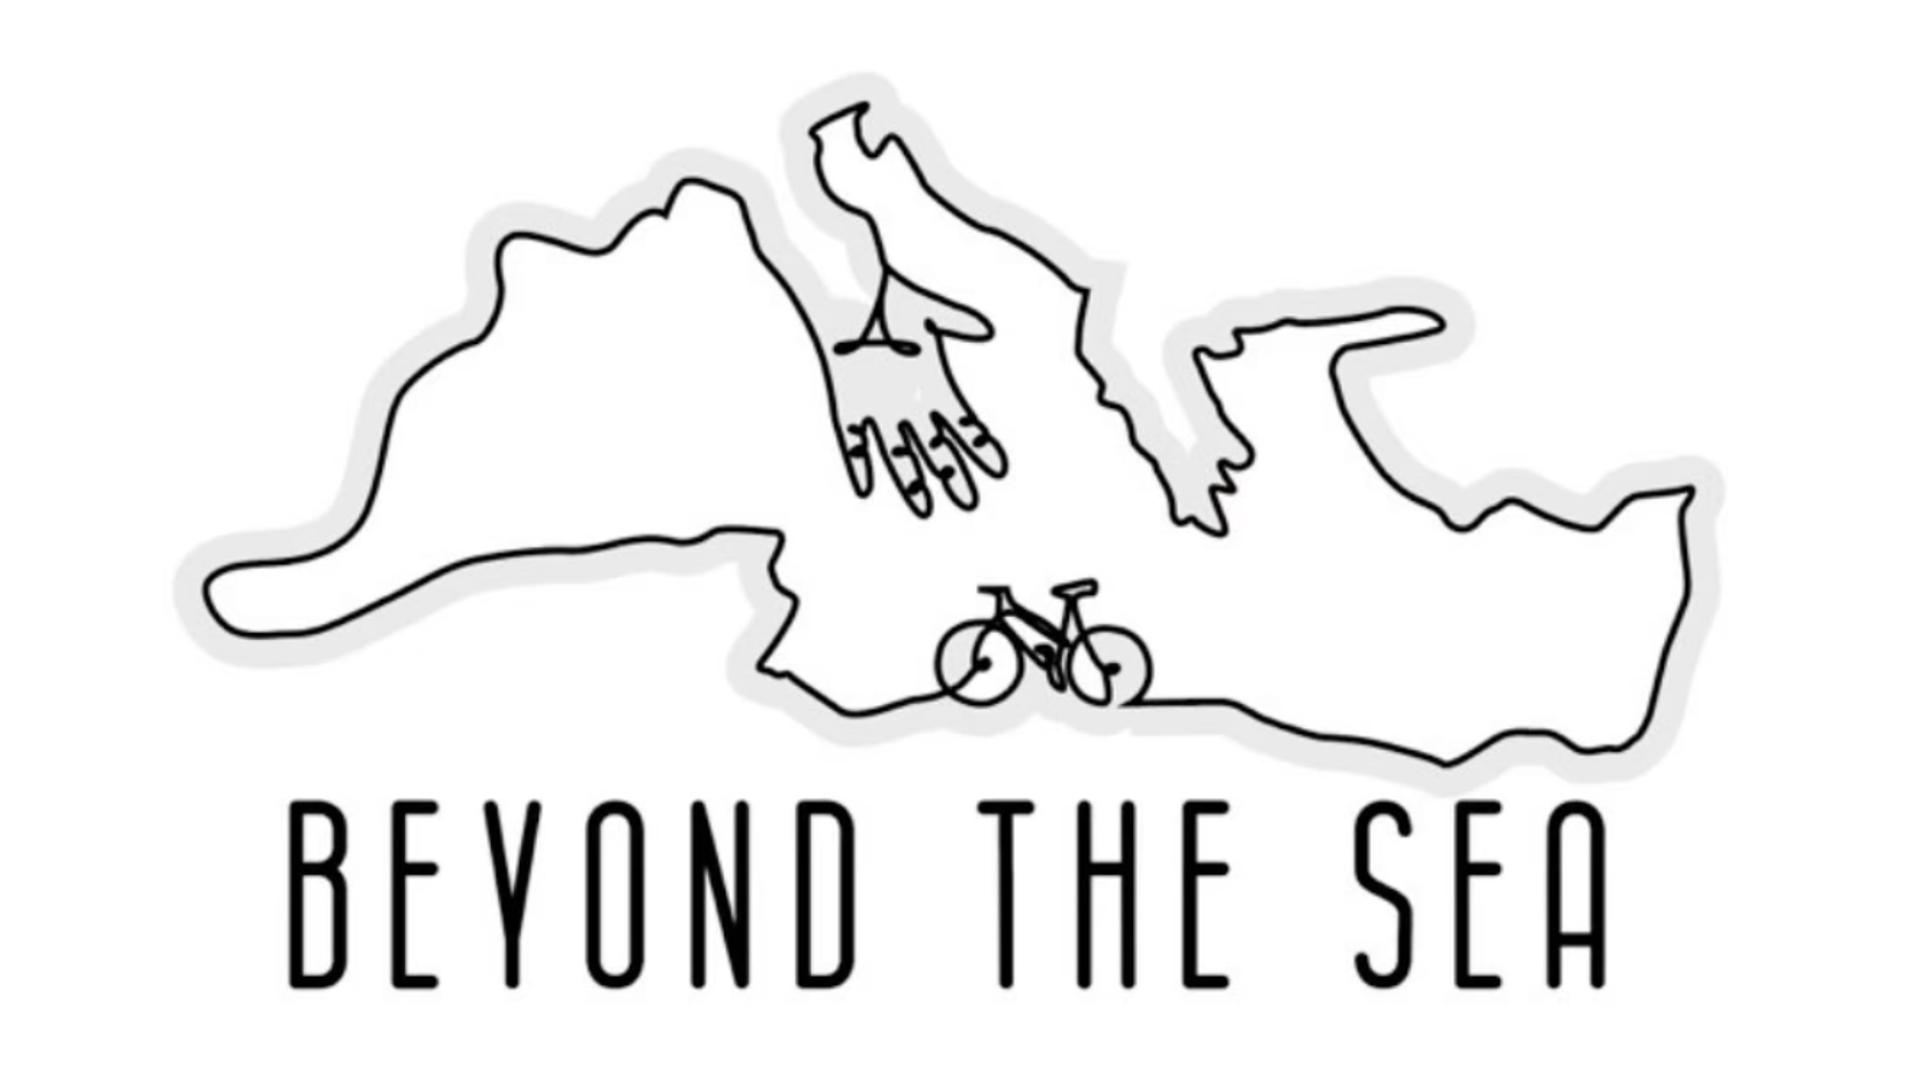 Mattia Lazzarin's Beyond the Sea Project